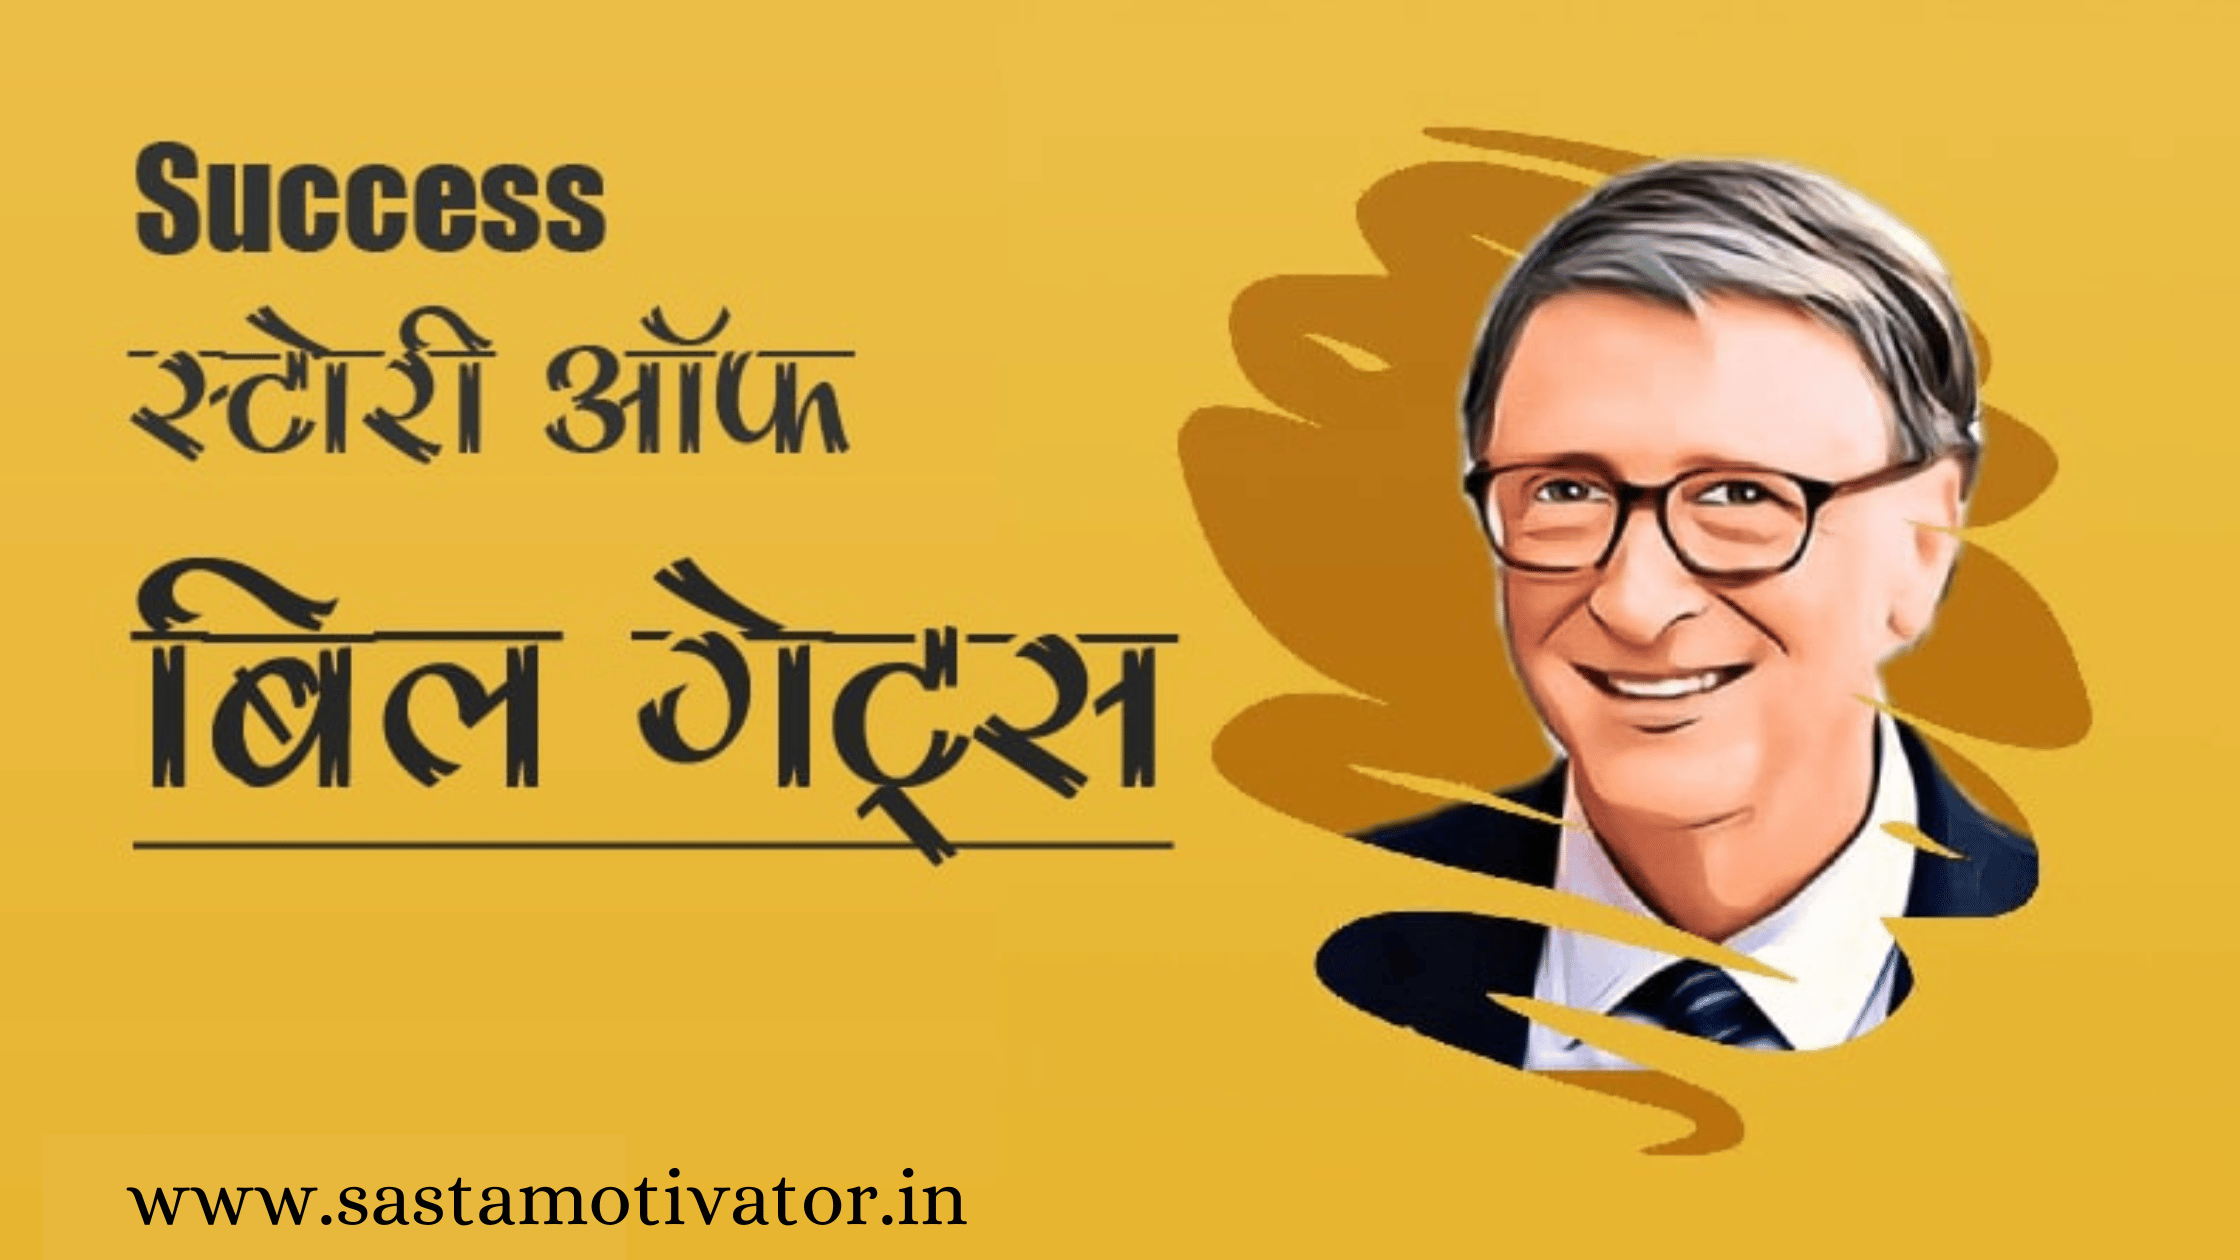 bill gates success story in hindi